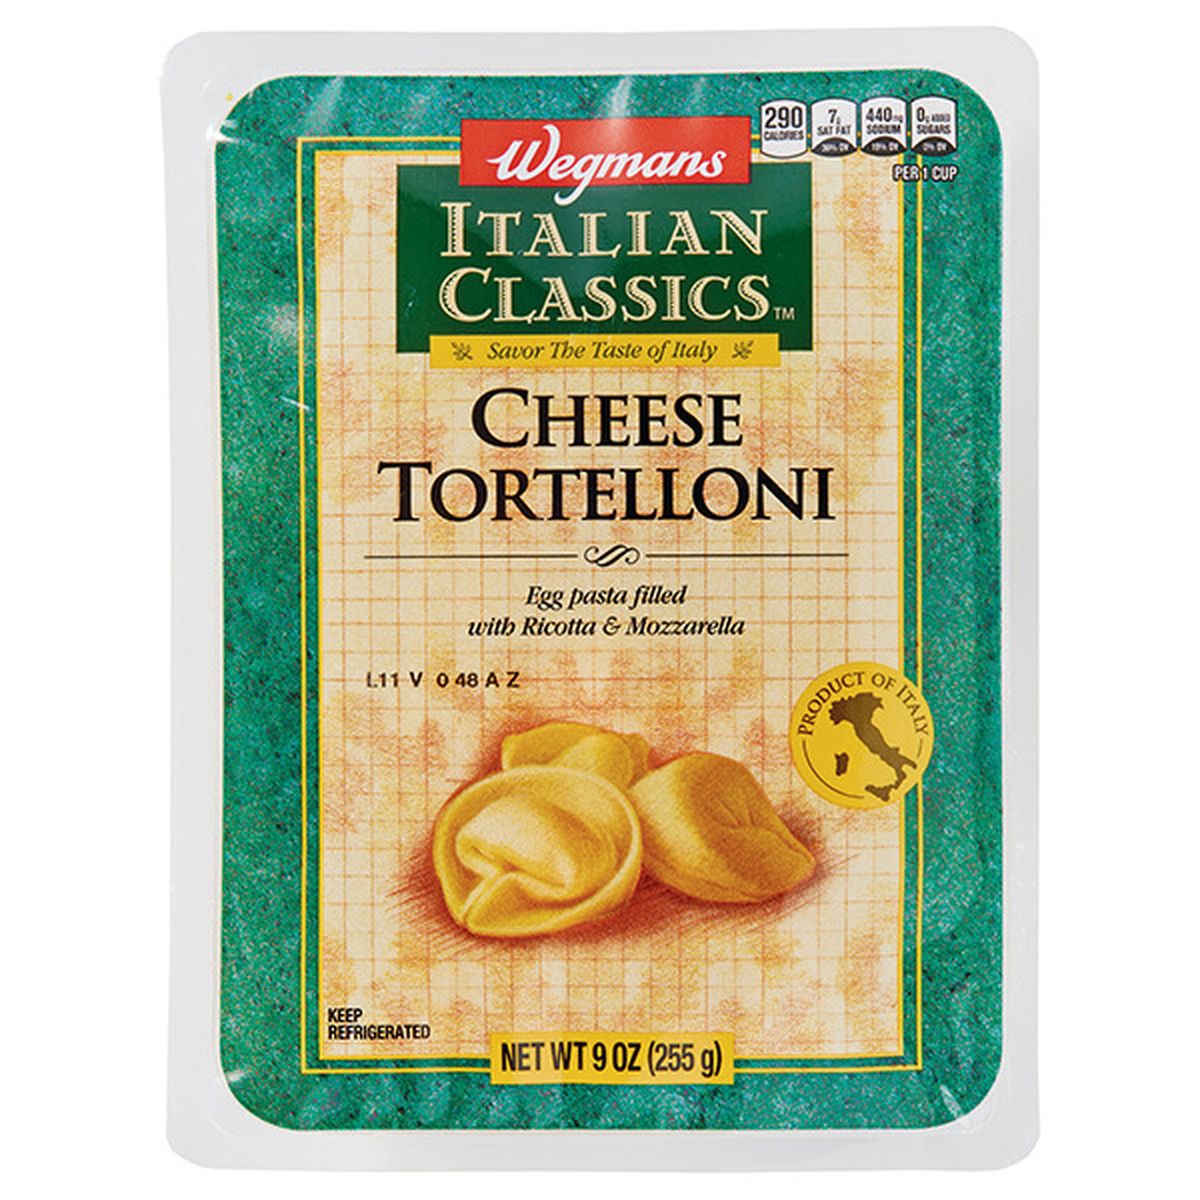 Calories in Wegmans Italian Classics Cheese Tortelloni